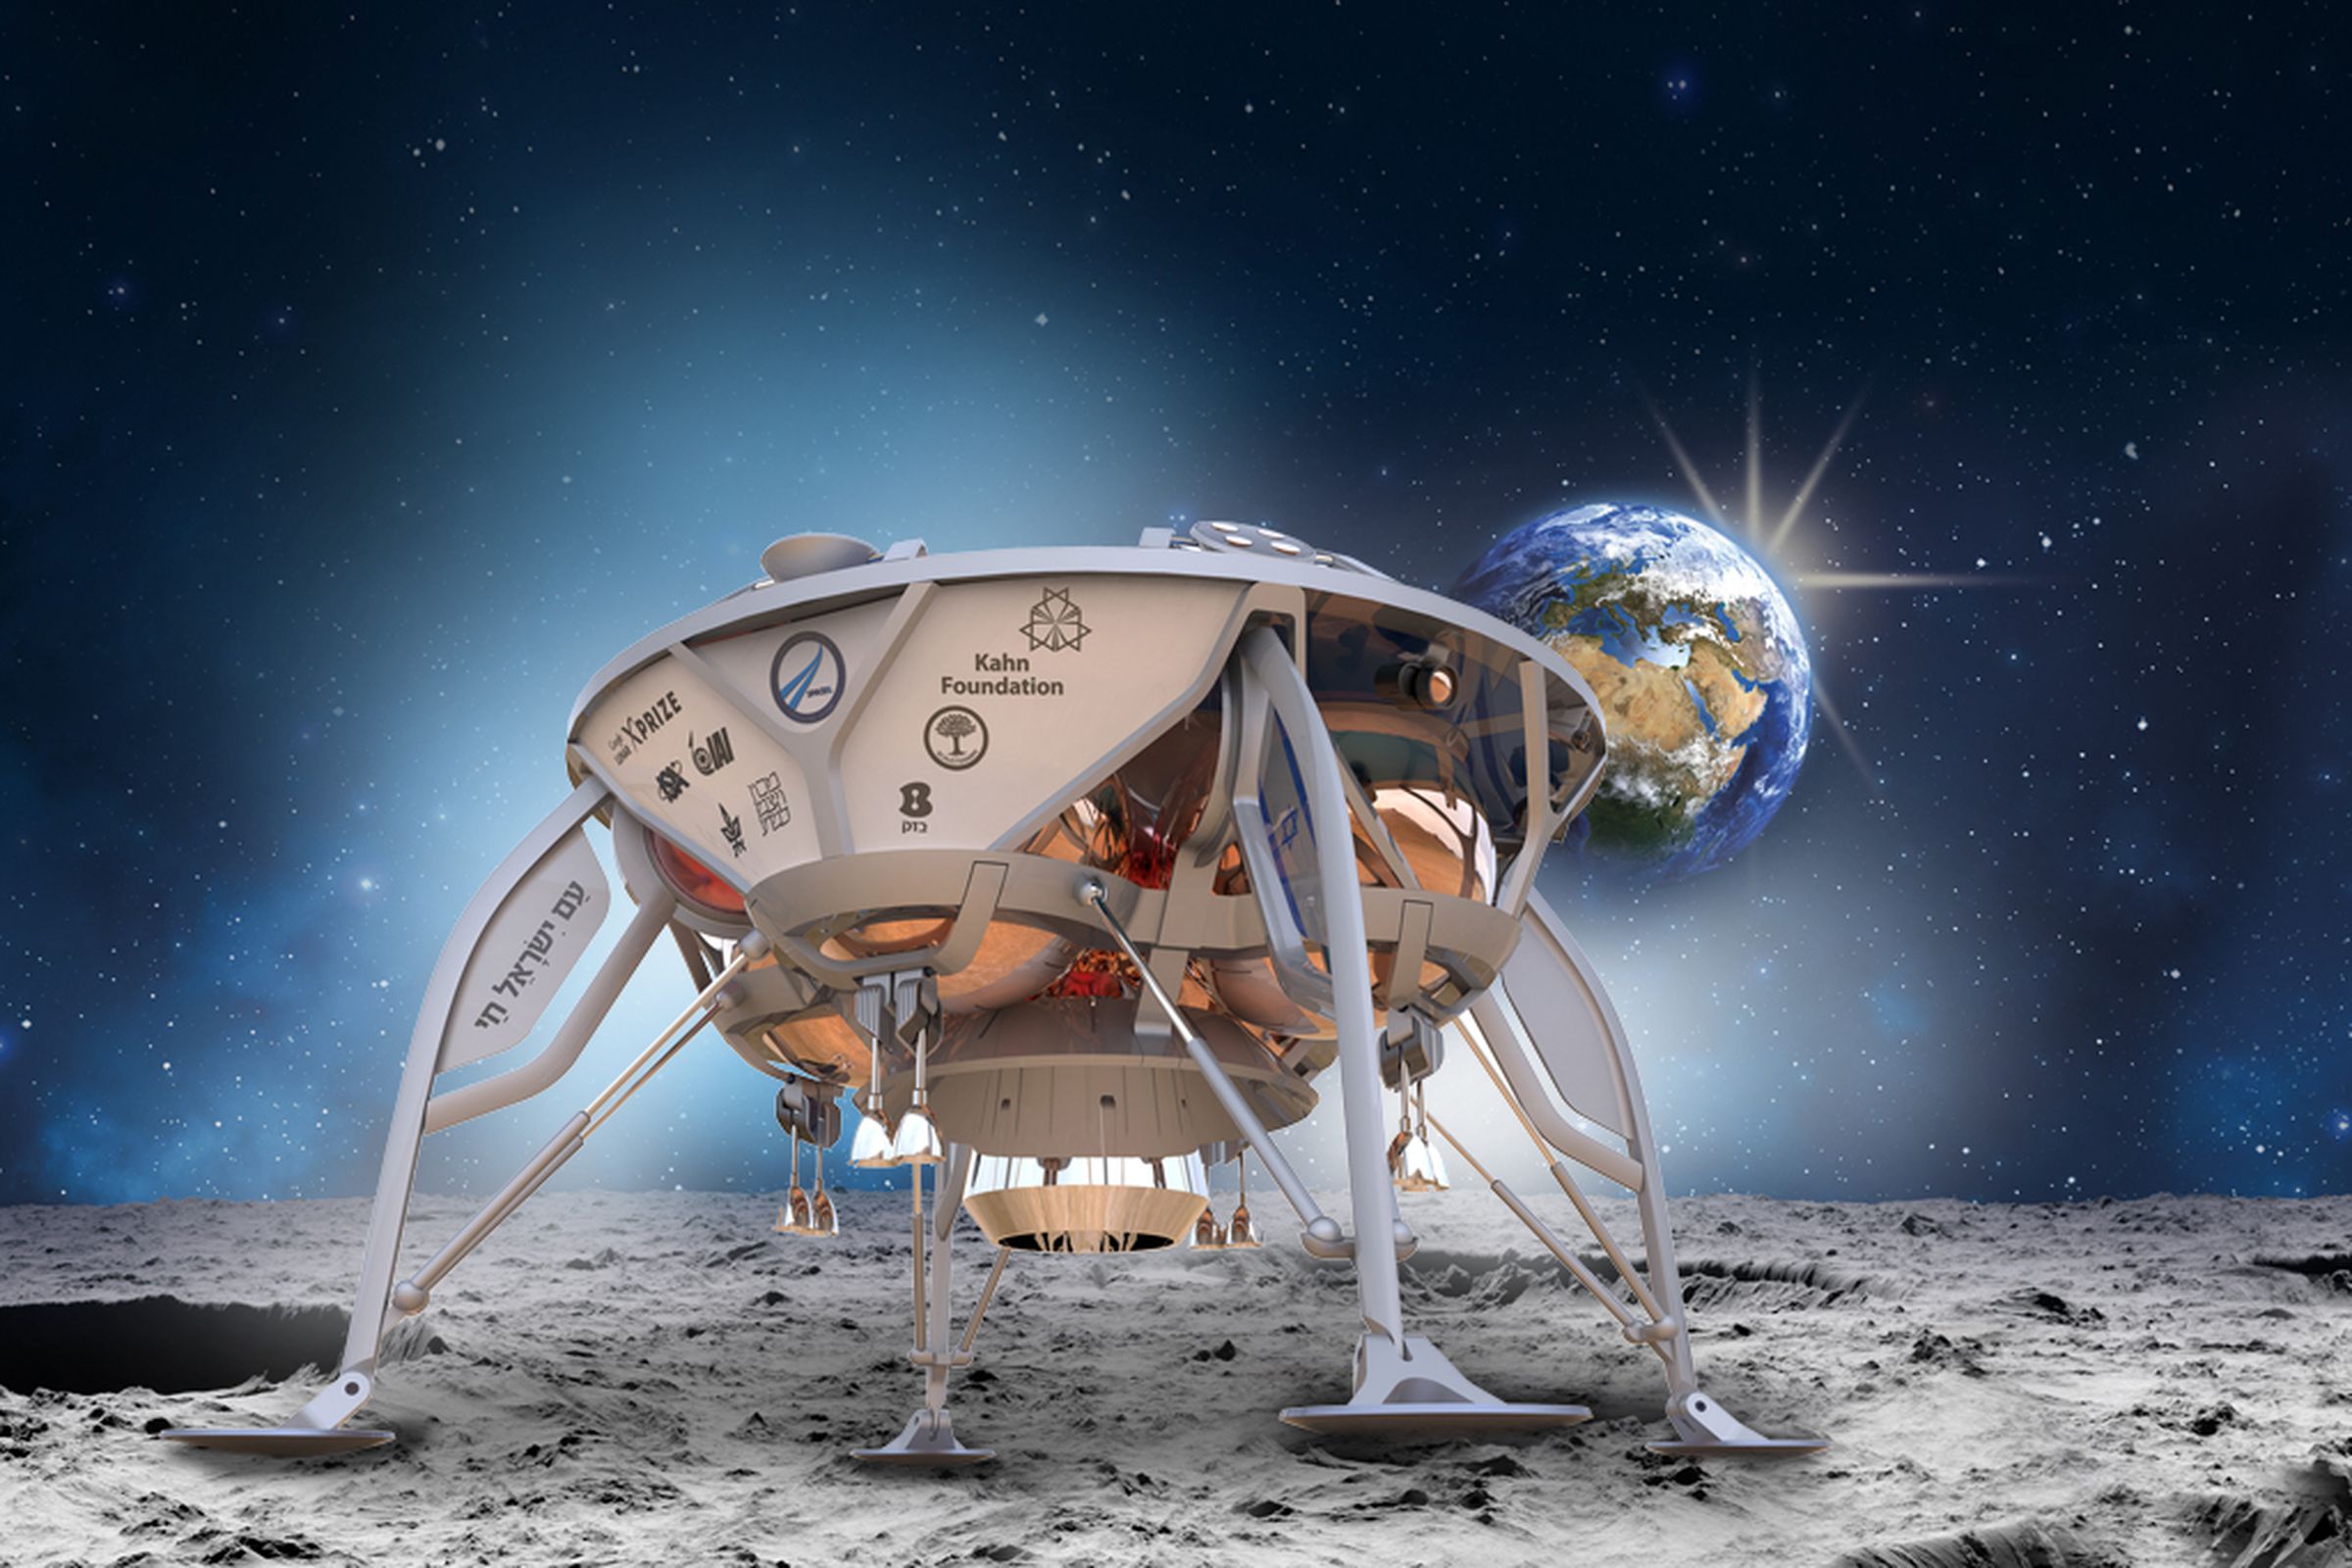 Автоматический аппарат передвигающийся по луне. Посадочный модуль лунохода 1. Берешит космический аппарат. Космический корабль Берешит. Посадочный модуль Аполлон 17.